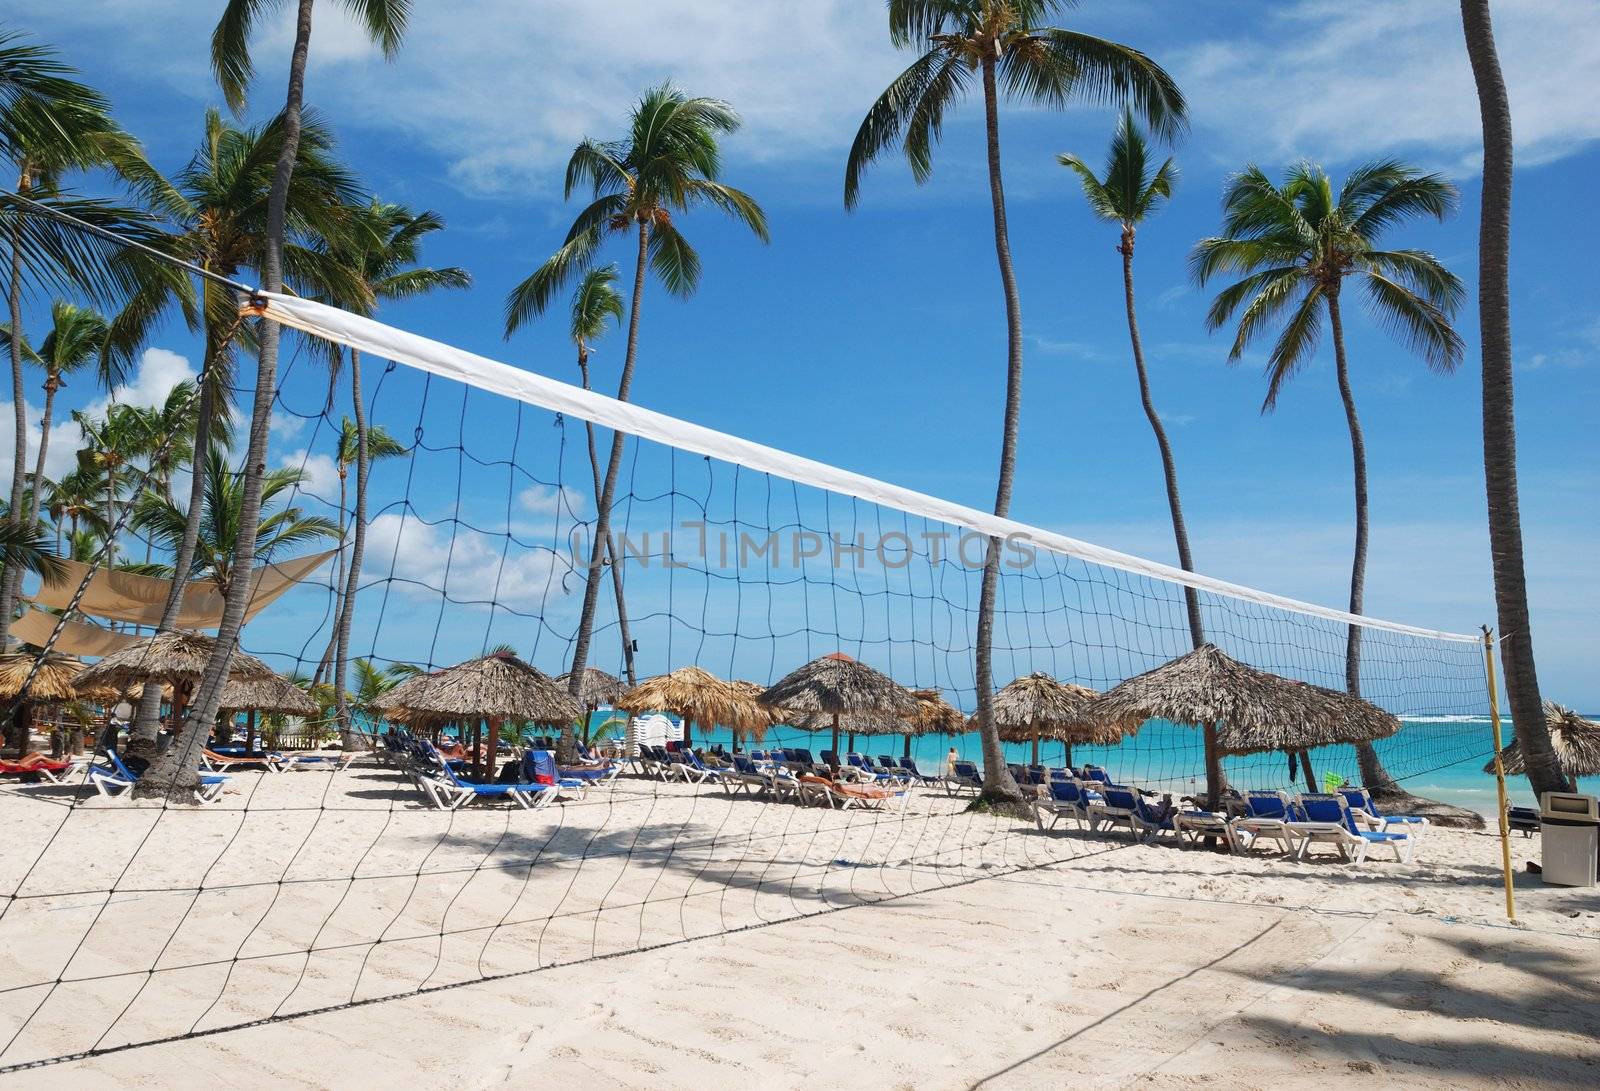 Beach Volleyball Net by haveseen